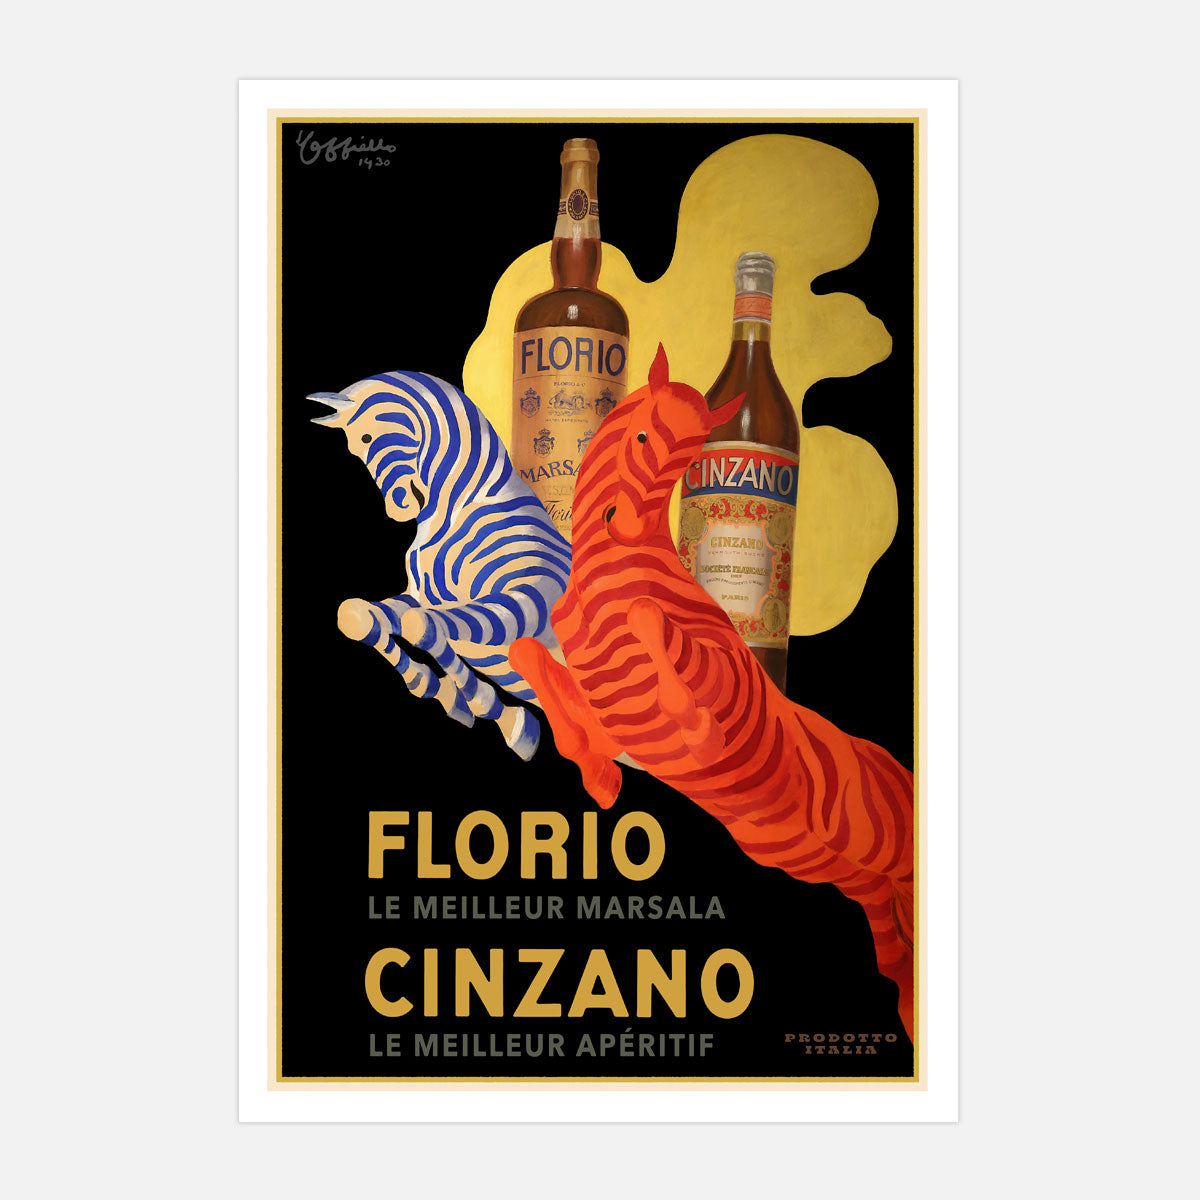 Florio Cinzano Italy retro vintage advertising print from Places We Luv